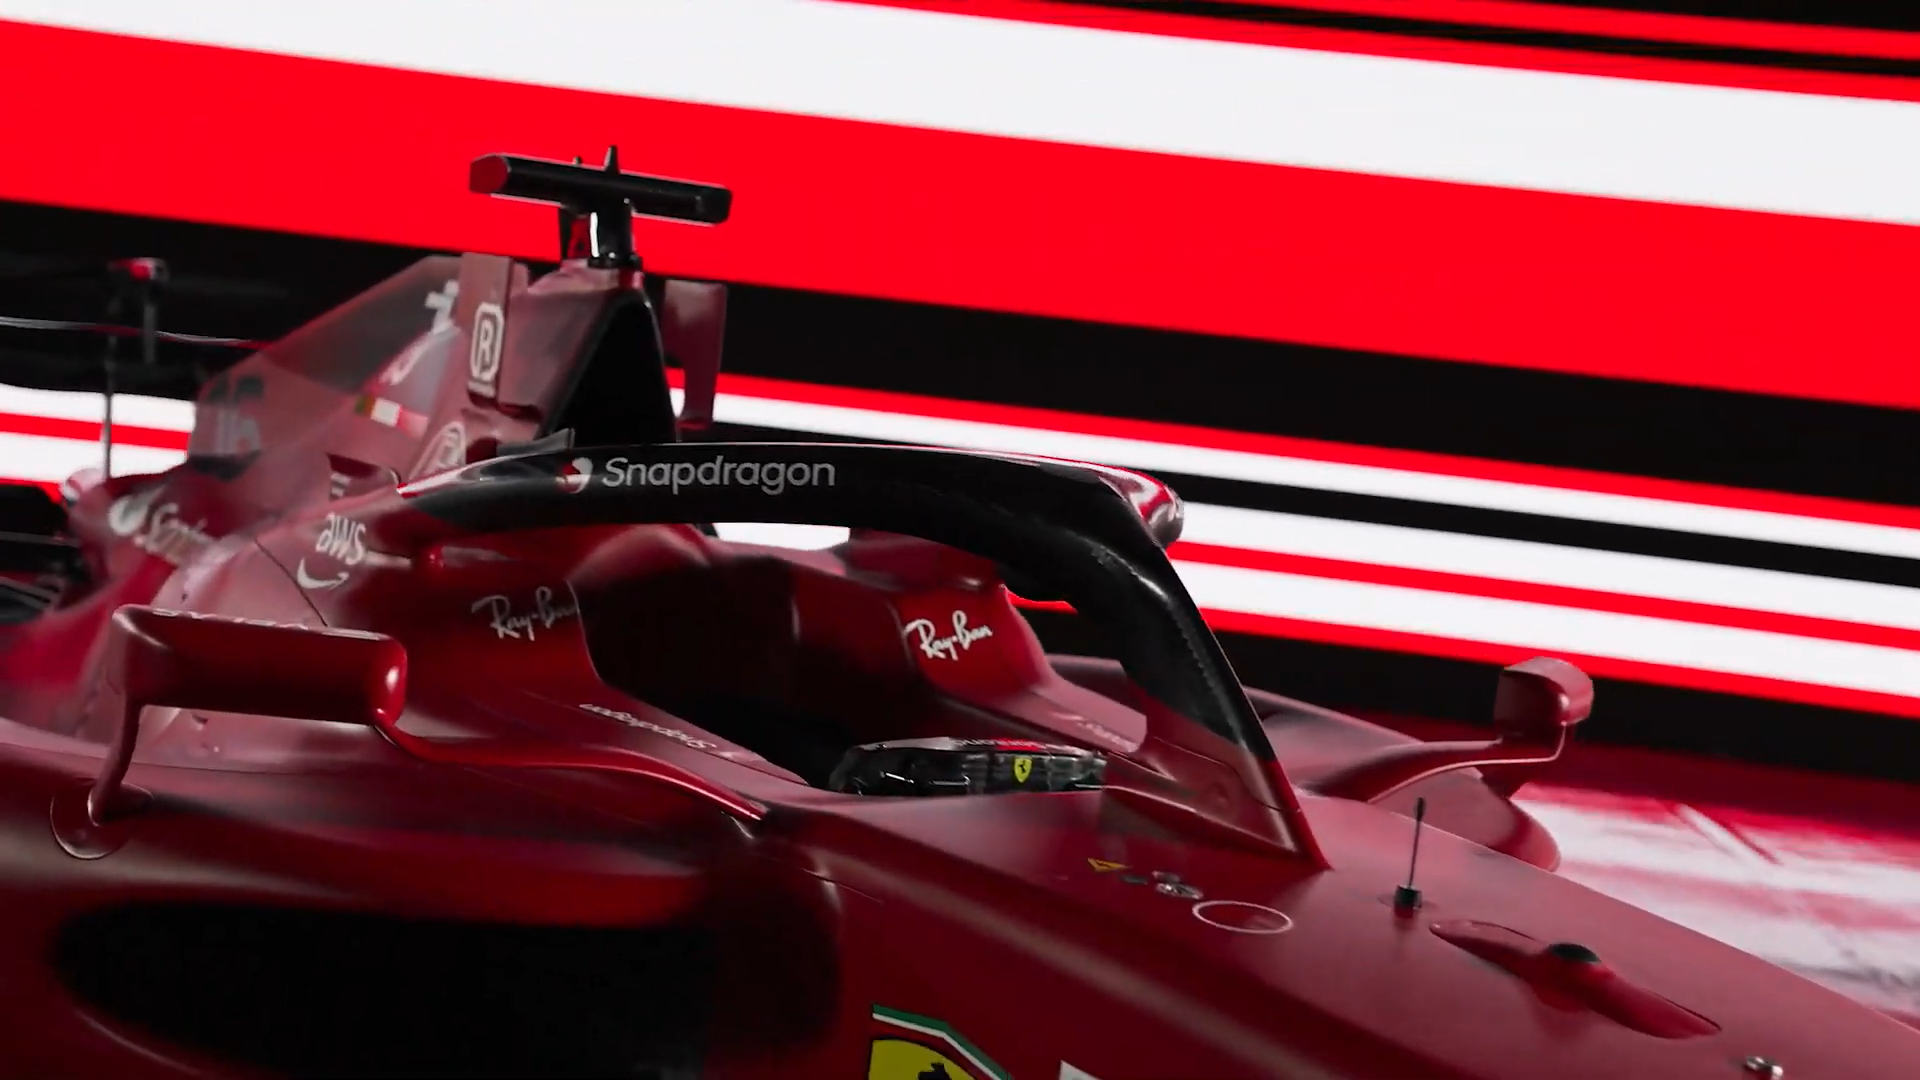 Watch Ferrari's 2022 F1 Car Launch Live The Race Google Chrome 2022 02 17 14 06 03